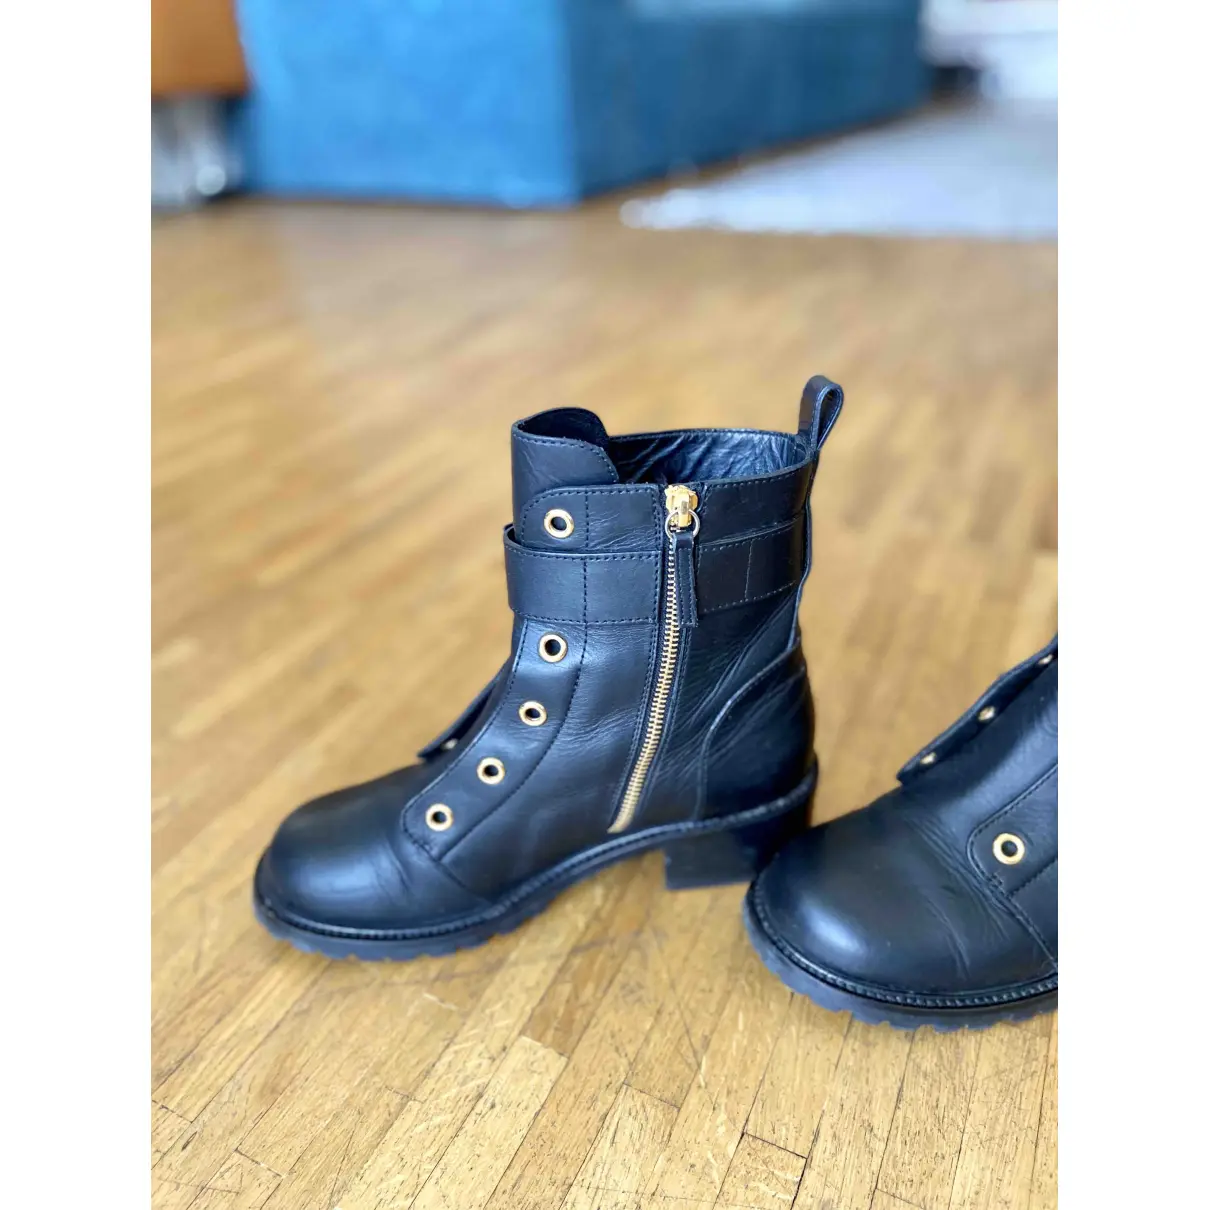 Buy Giuseppe Zanotti Leather biker boots online